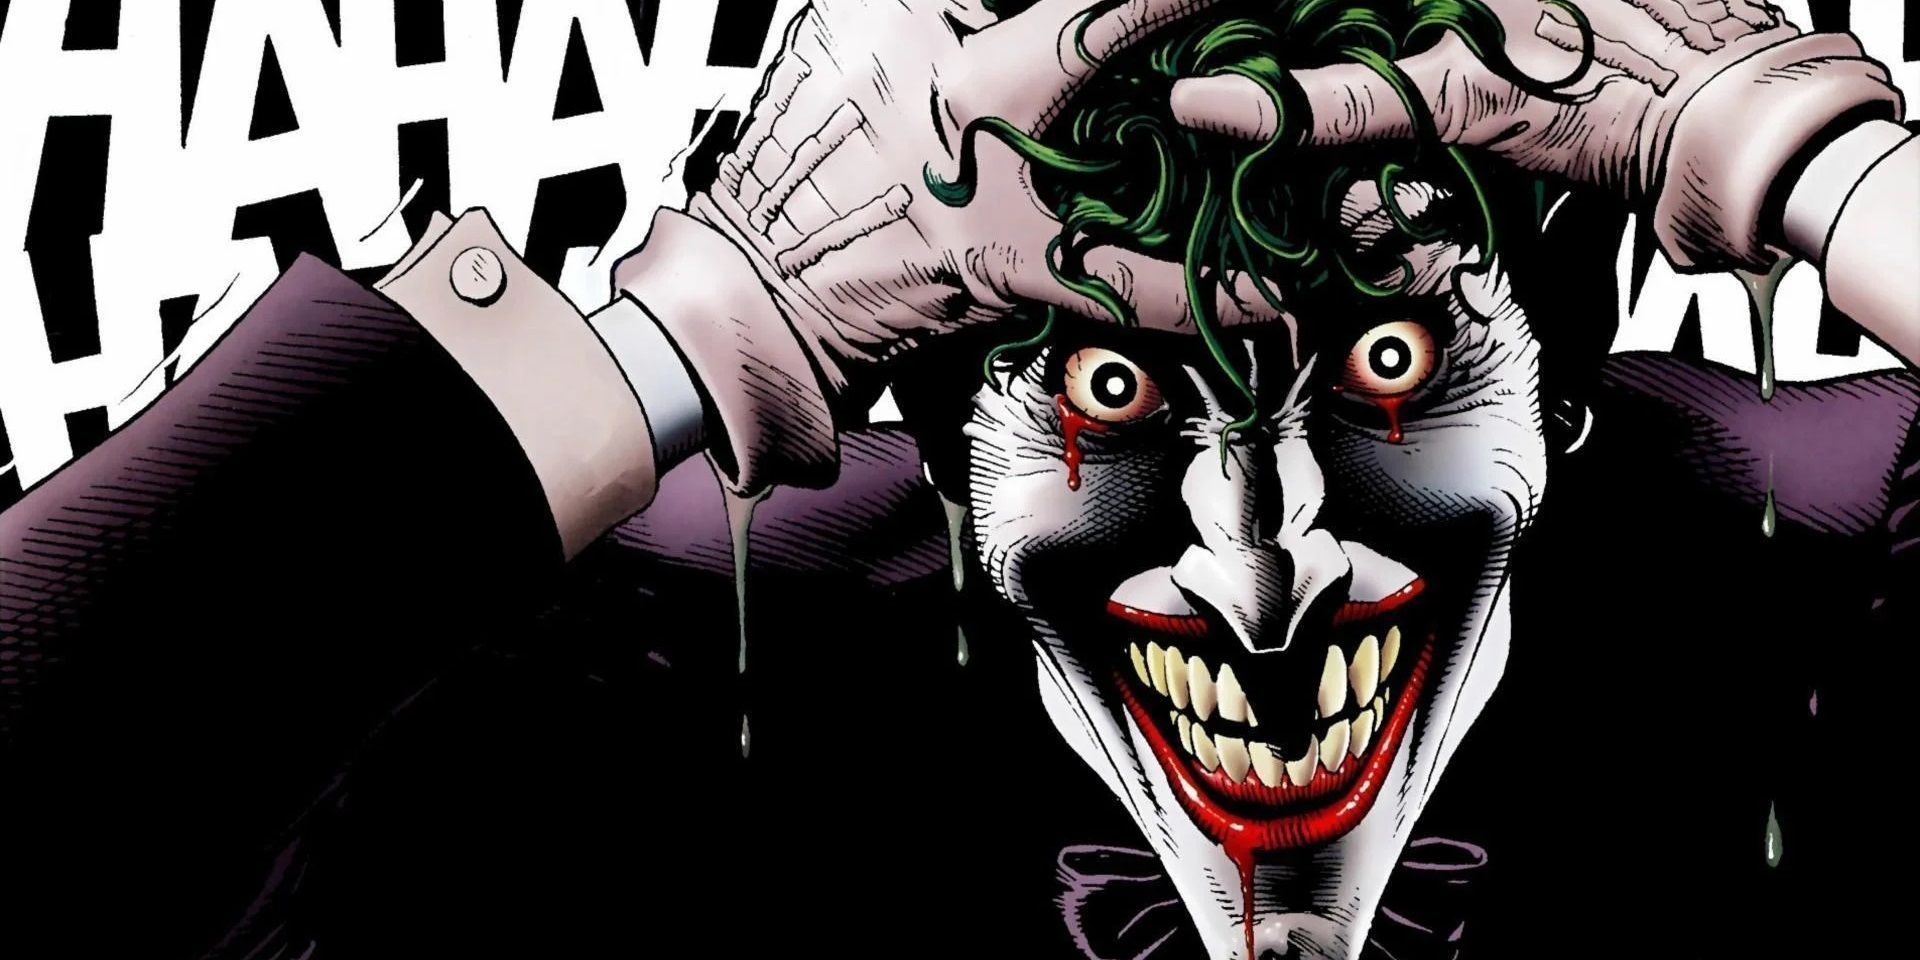 The Joker in The Killing Joke